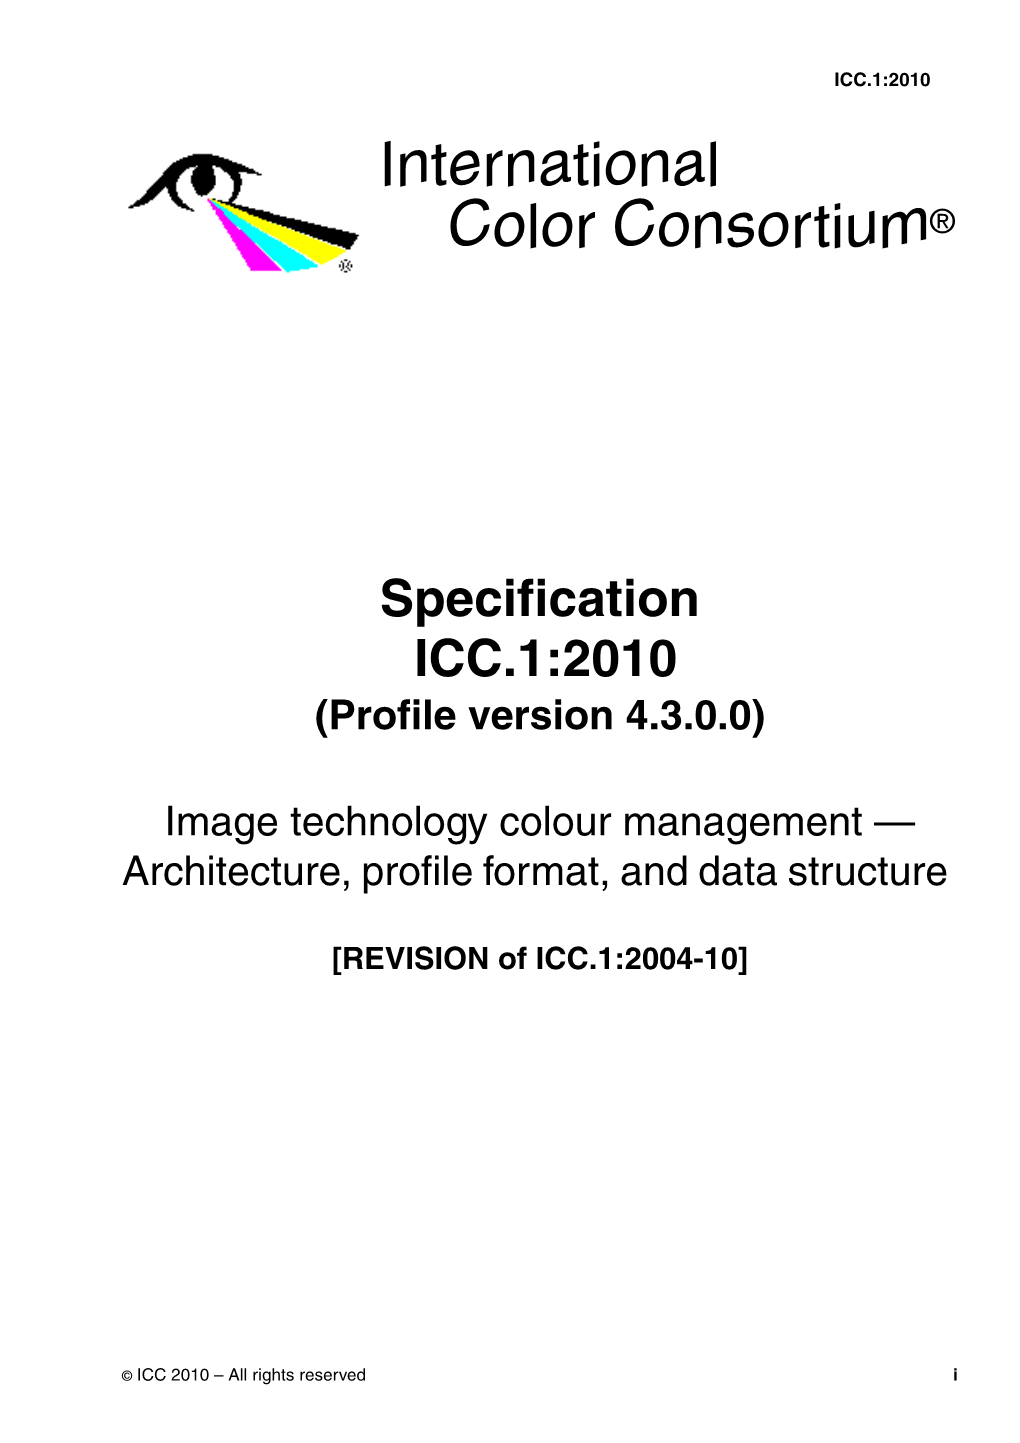 Specification ICC.1:2010 (Profile Version 4.3.0.0)